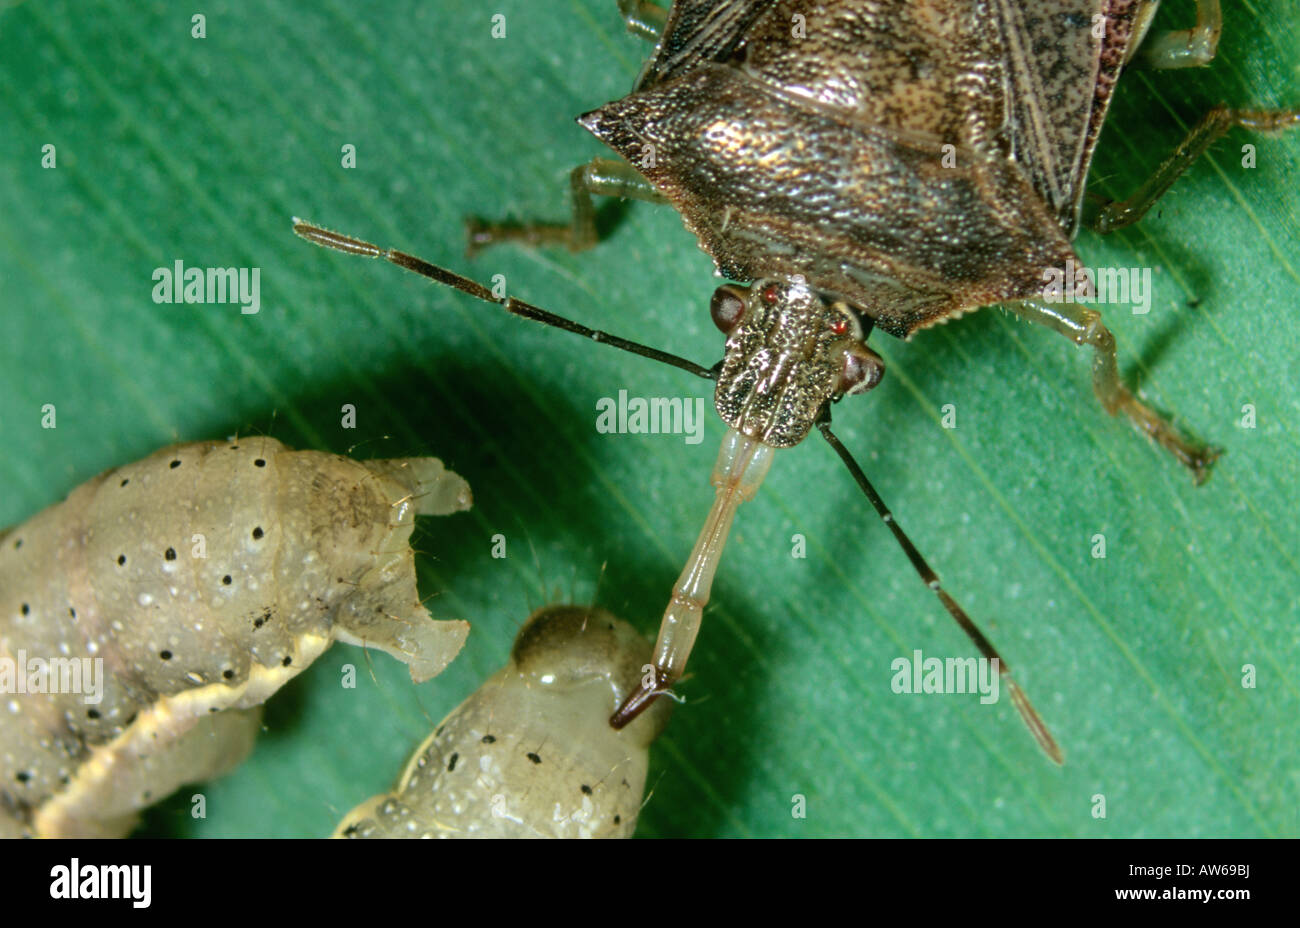 Depredador Podisus maculiventris apestan bug estilete insertado en presa de Caterpillar Foto de stock